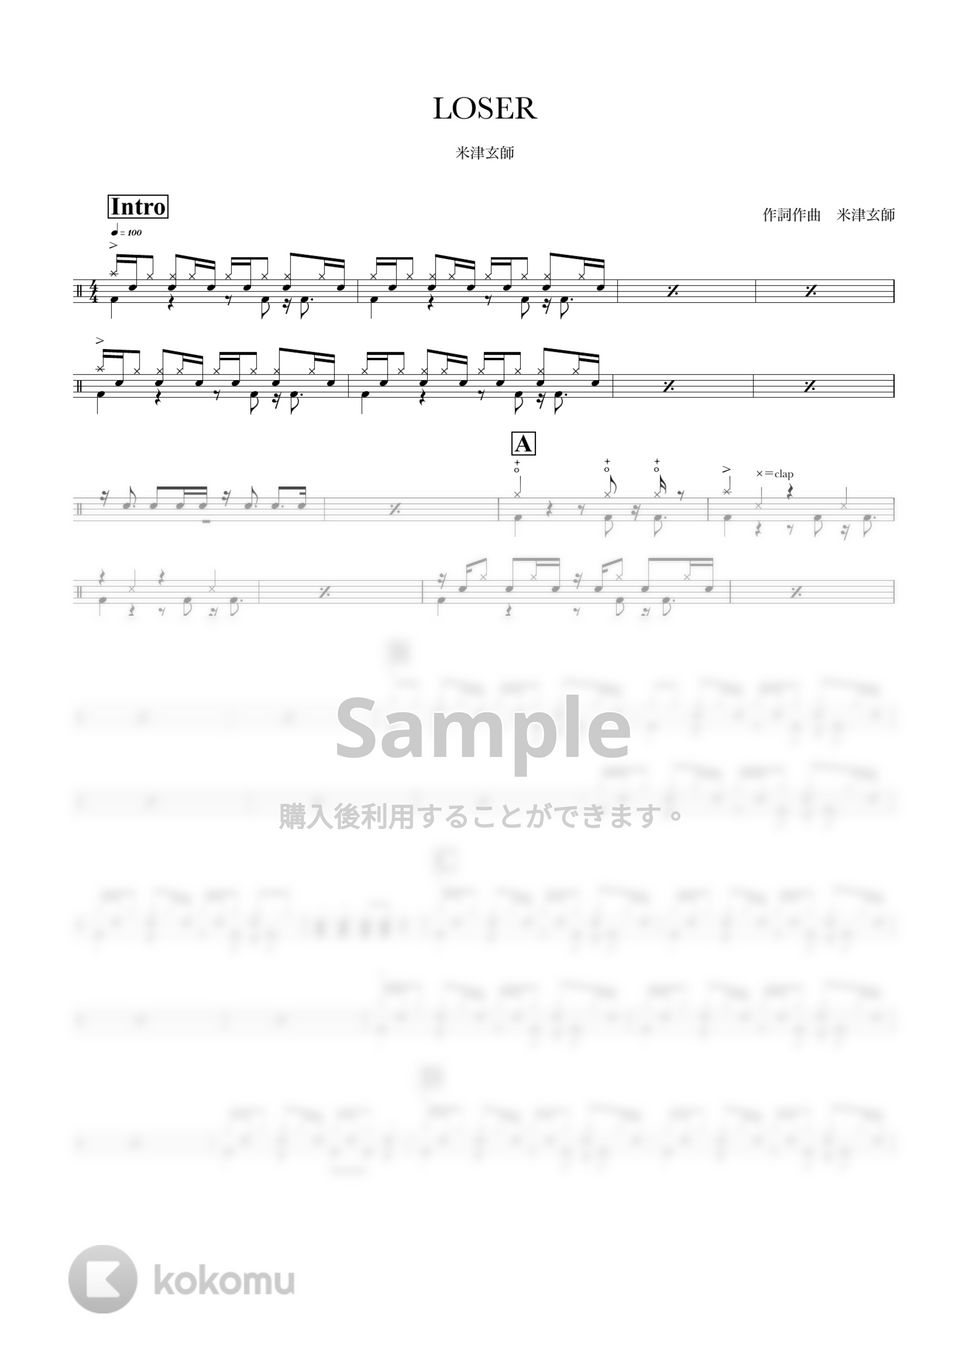 米津玄師 - LOSER by ONEDRUMS